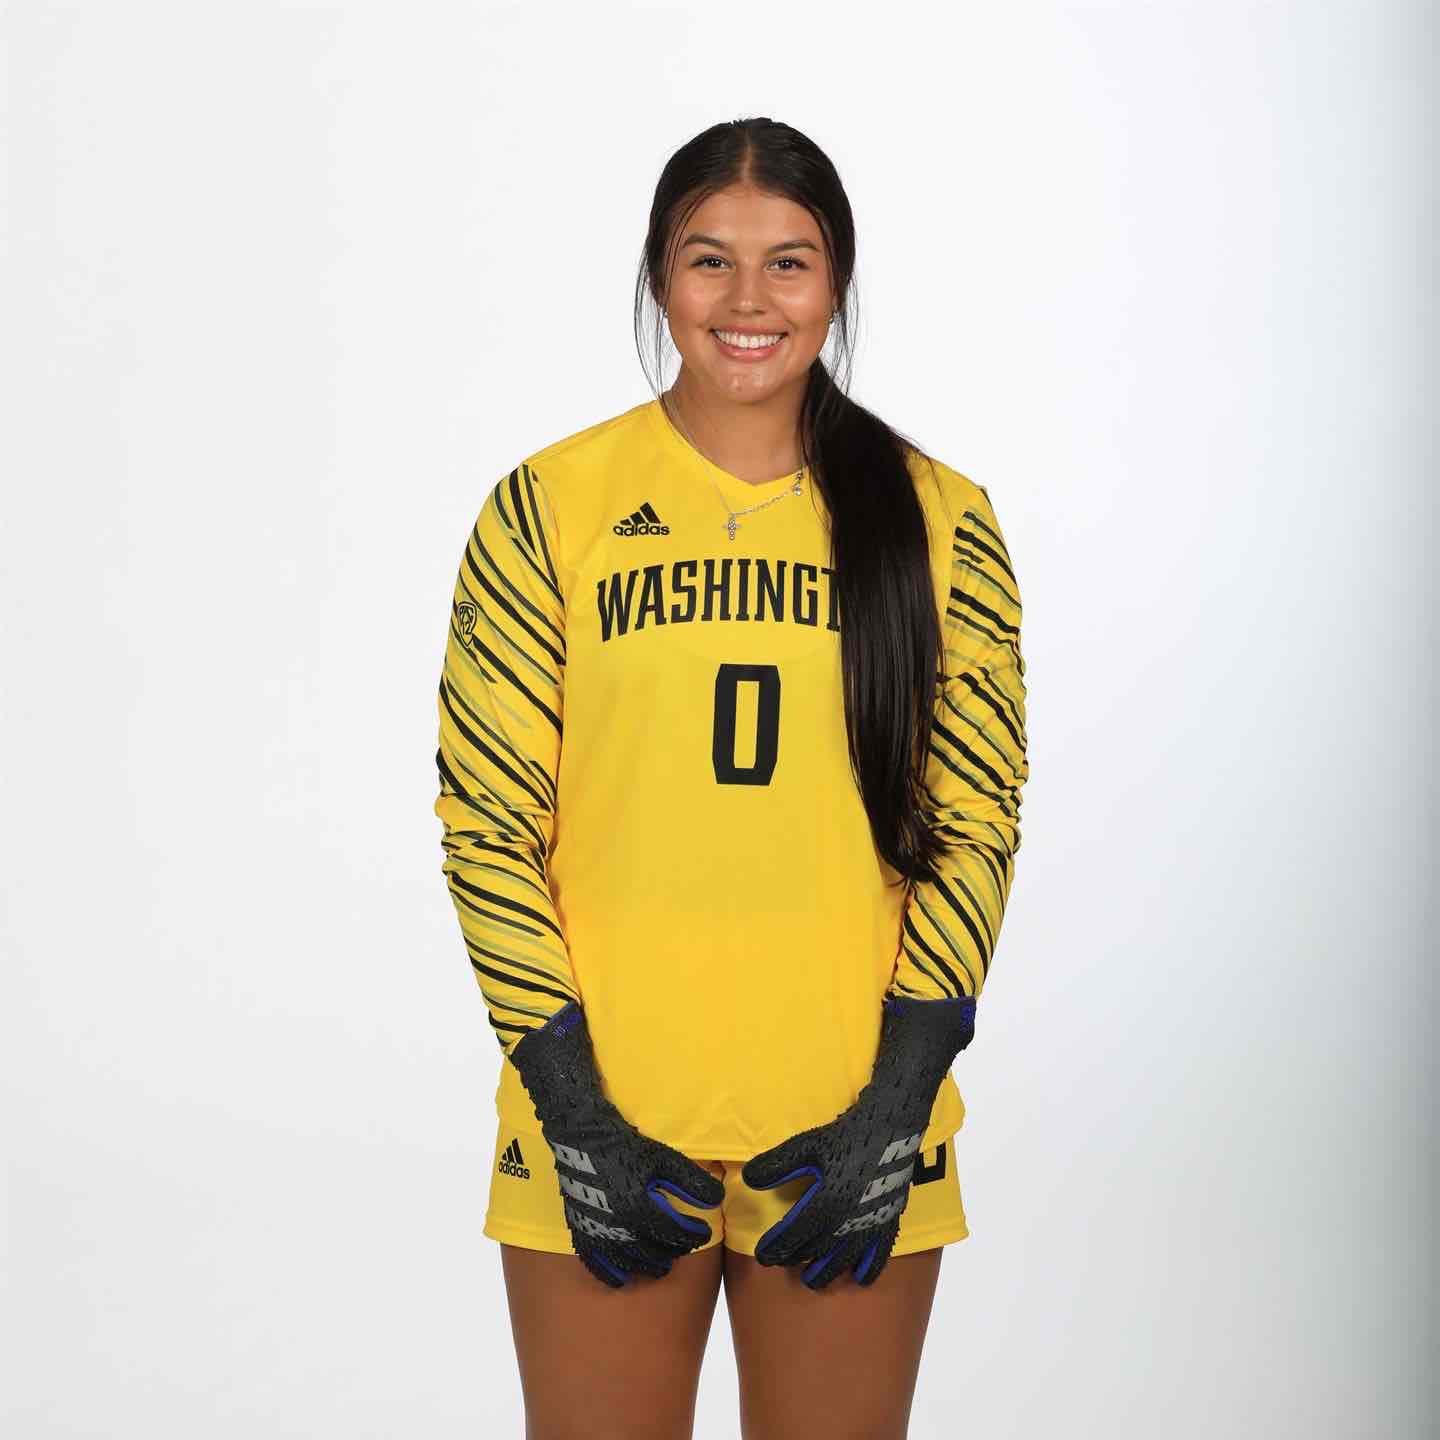 Olivia Juarez athlete profile head shot